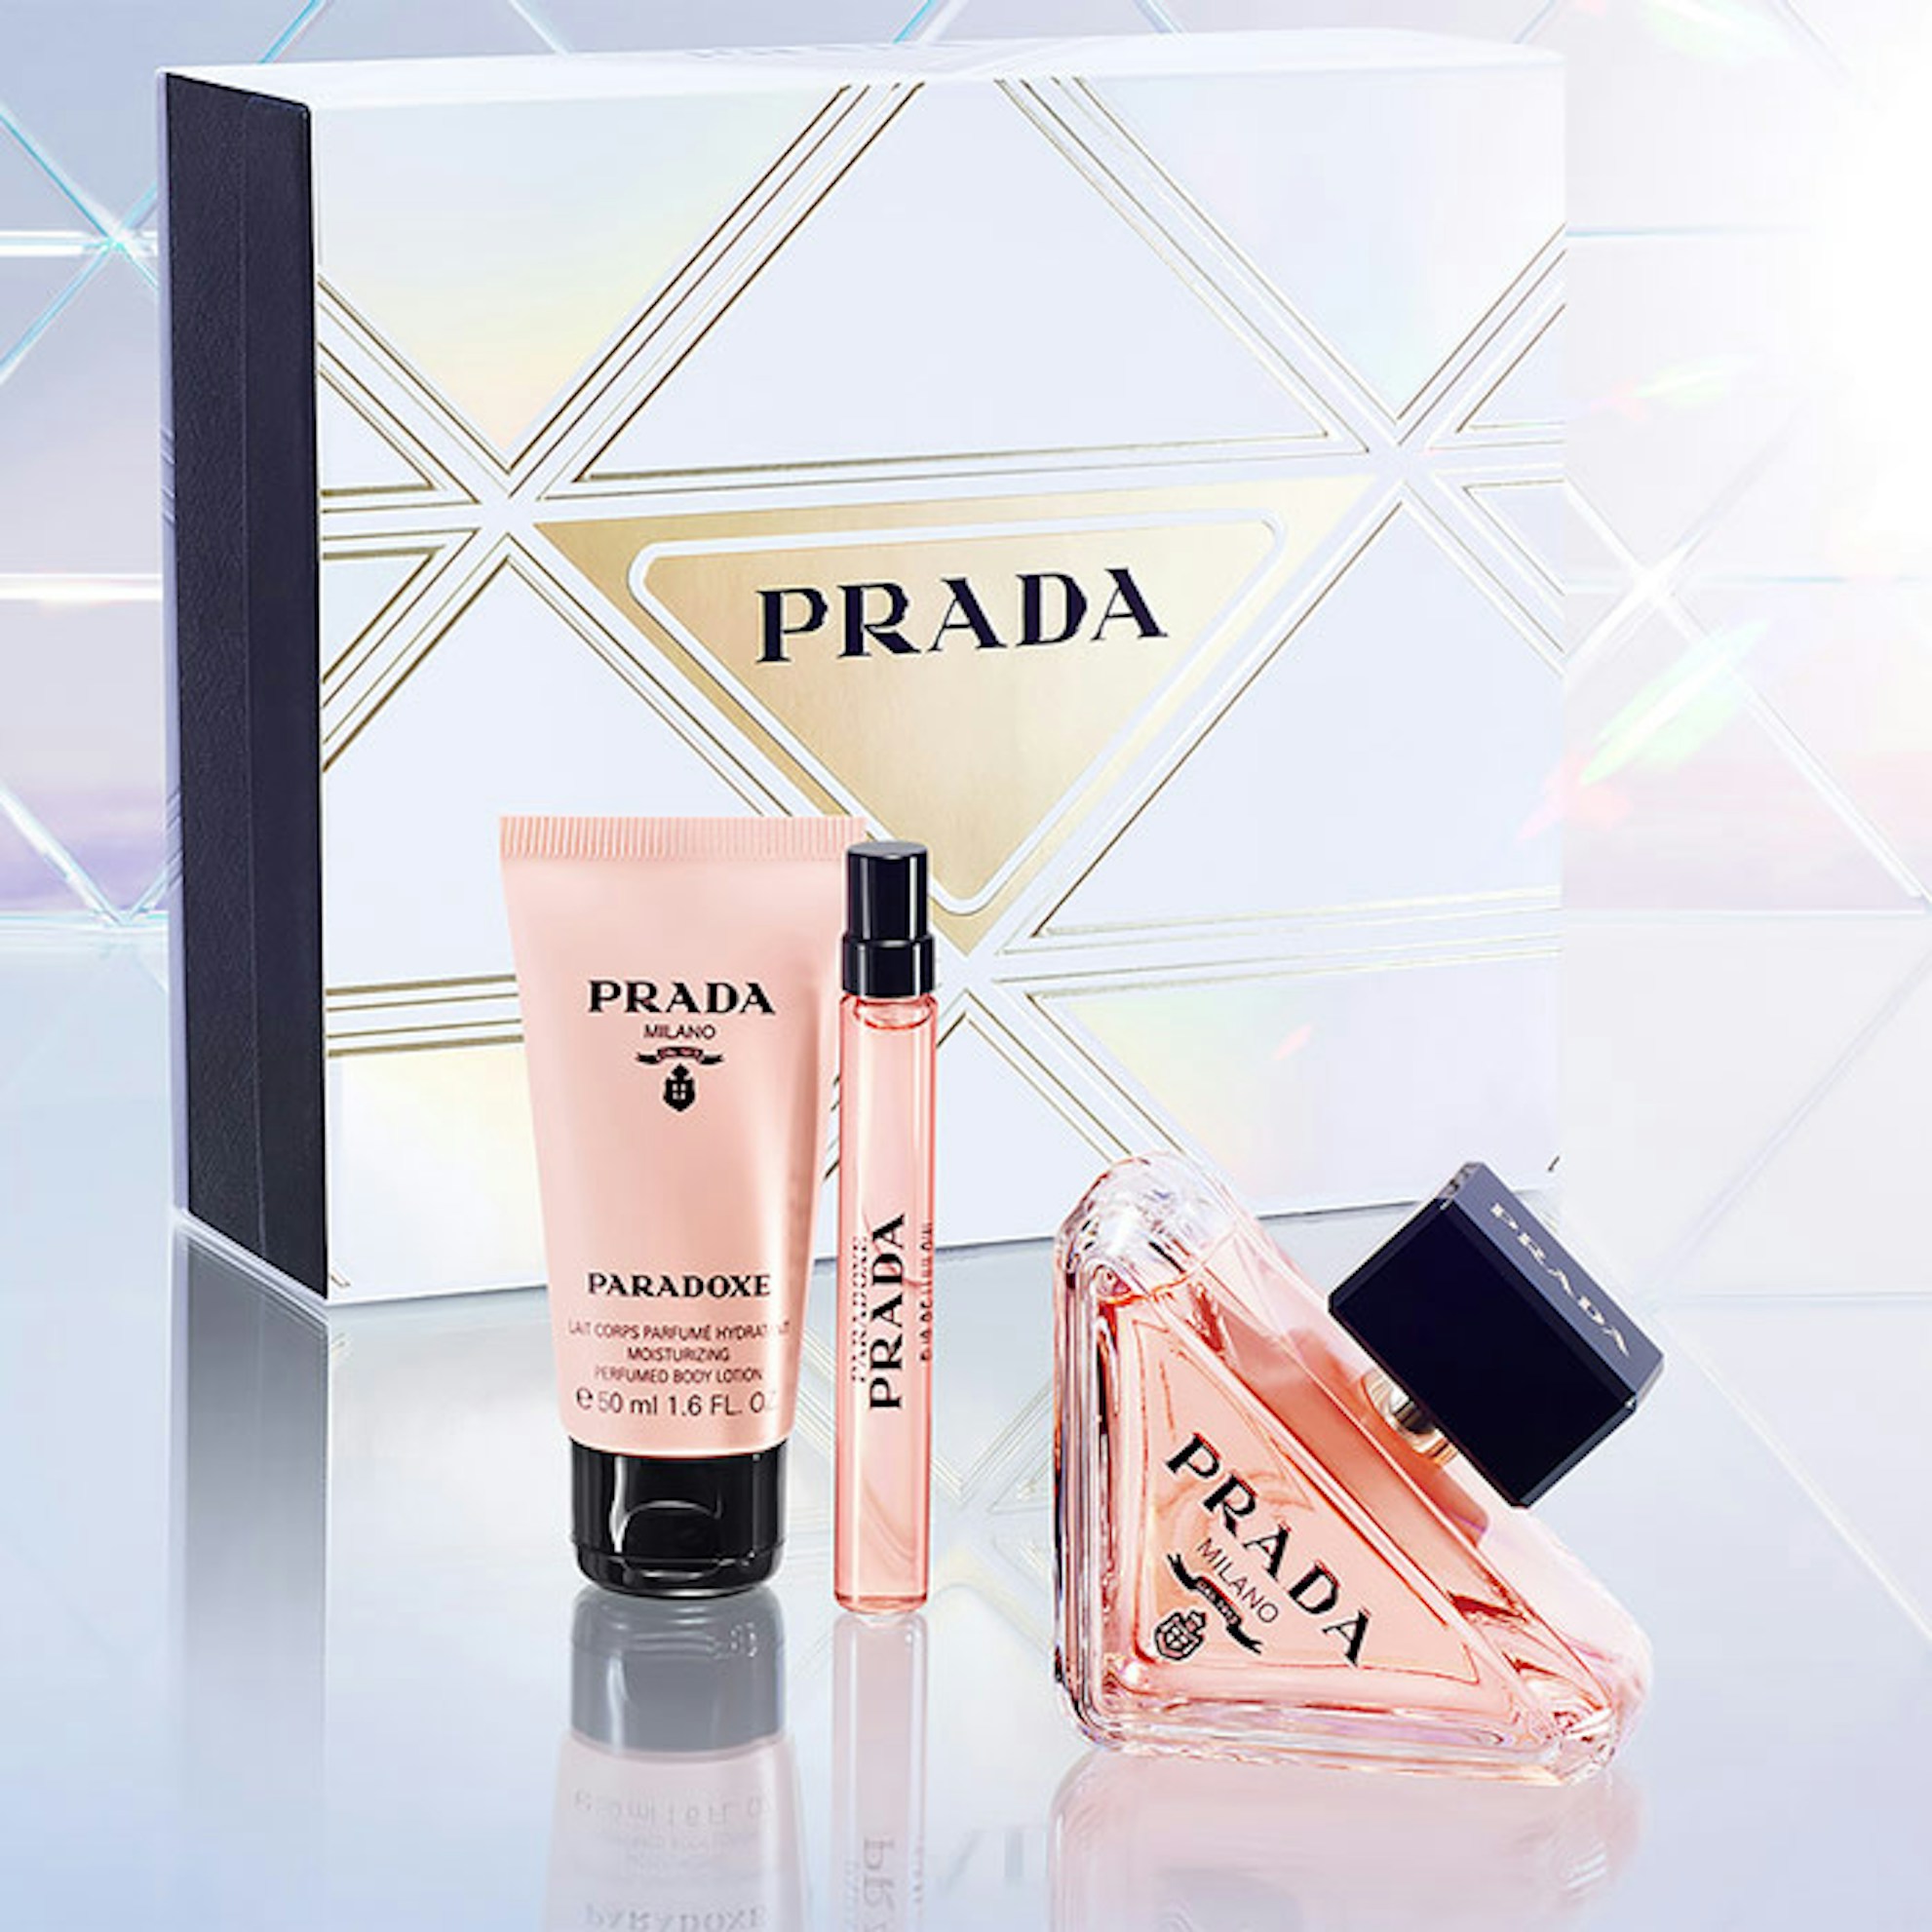 Prada Paradoxe Eau De Parfum 90ml Christmas Gift Set | The Fragrance Shop